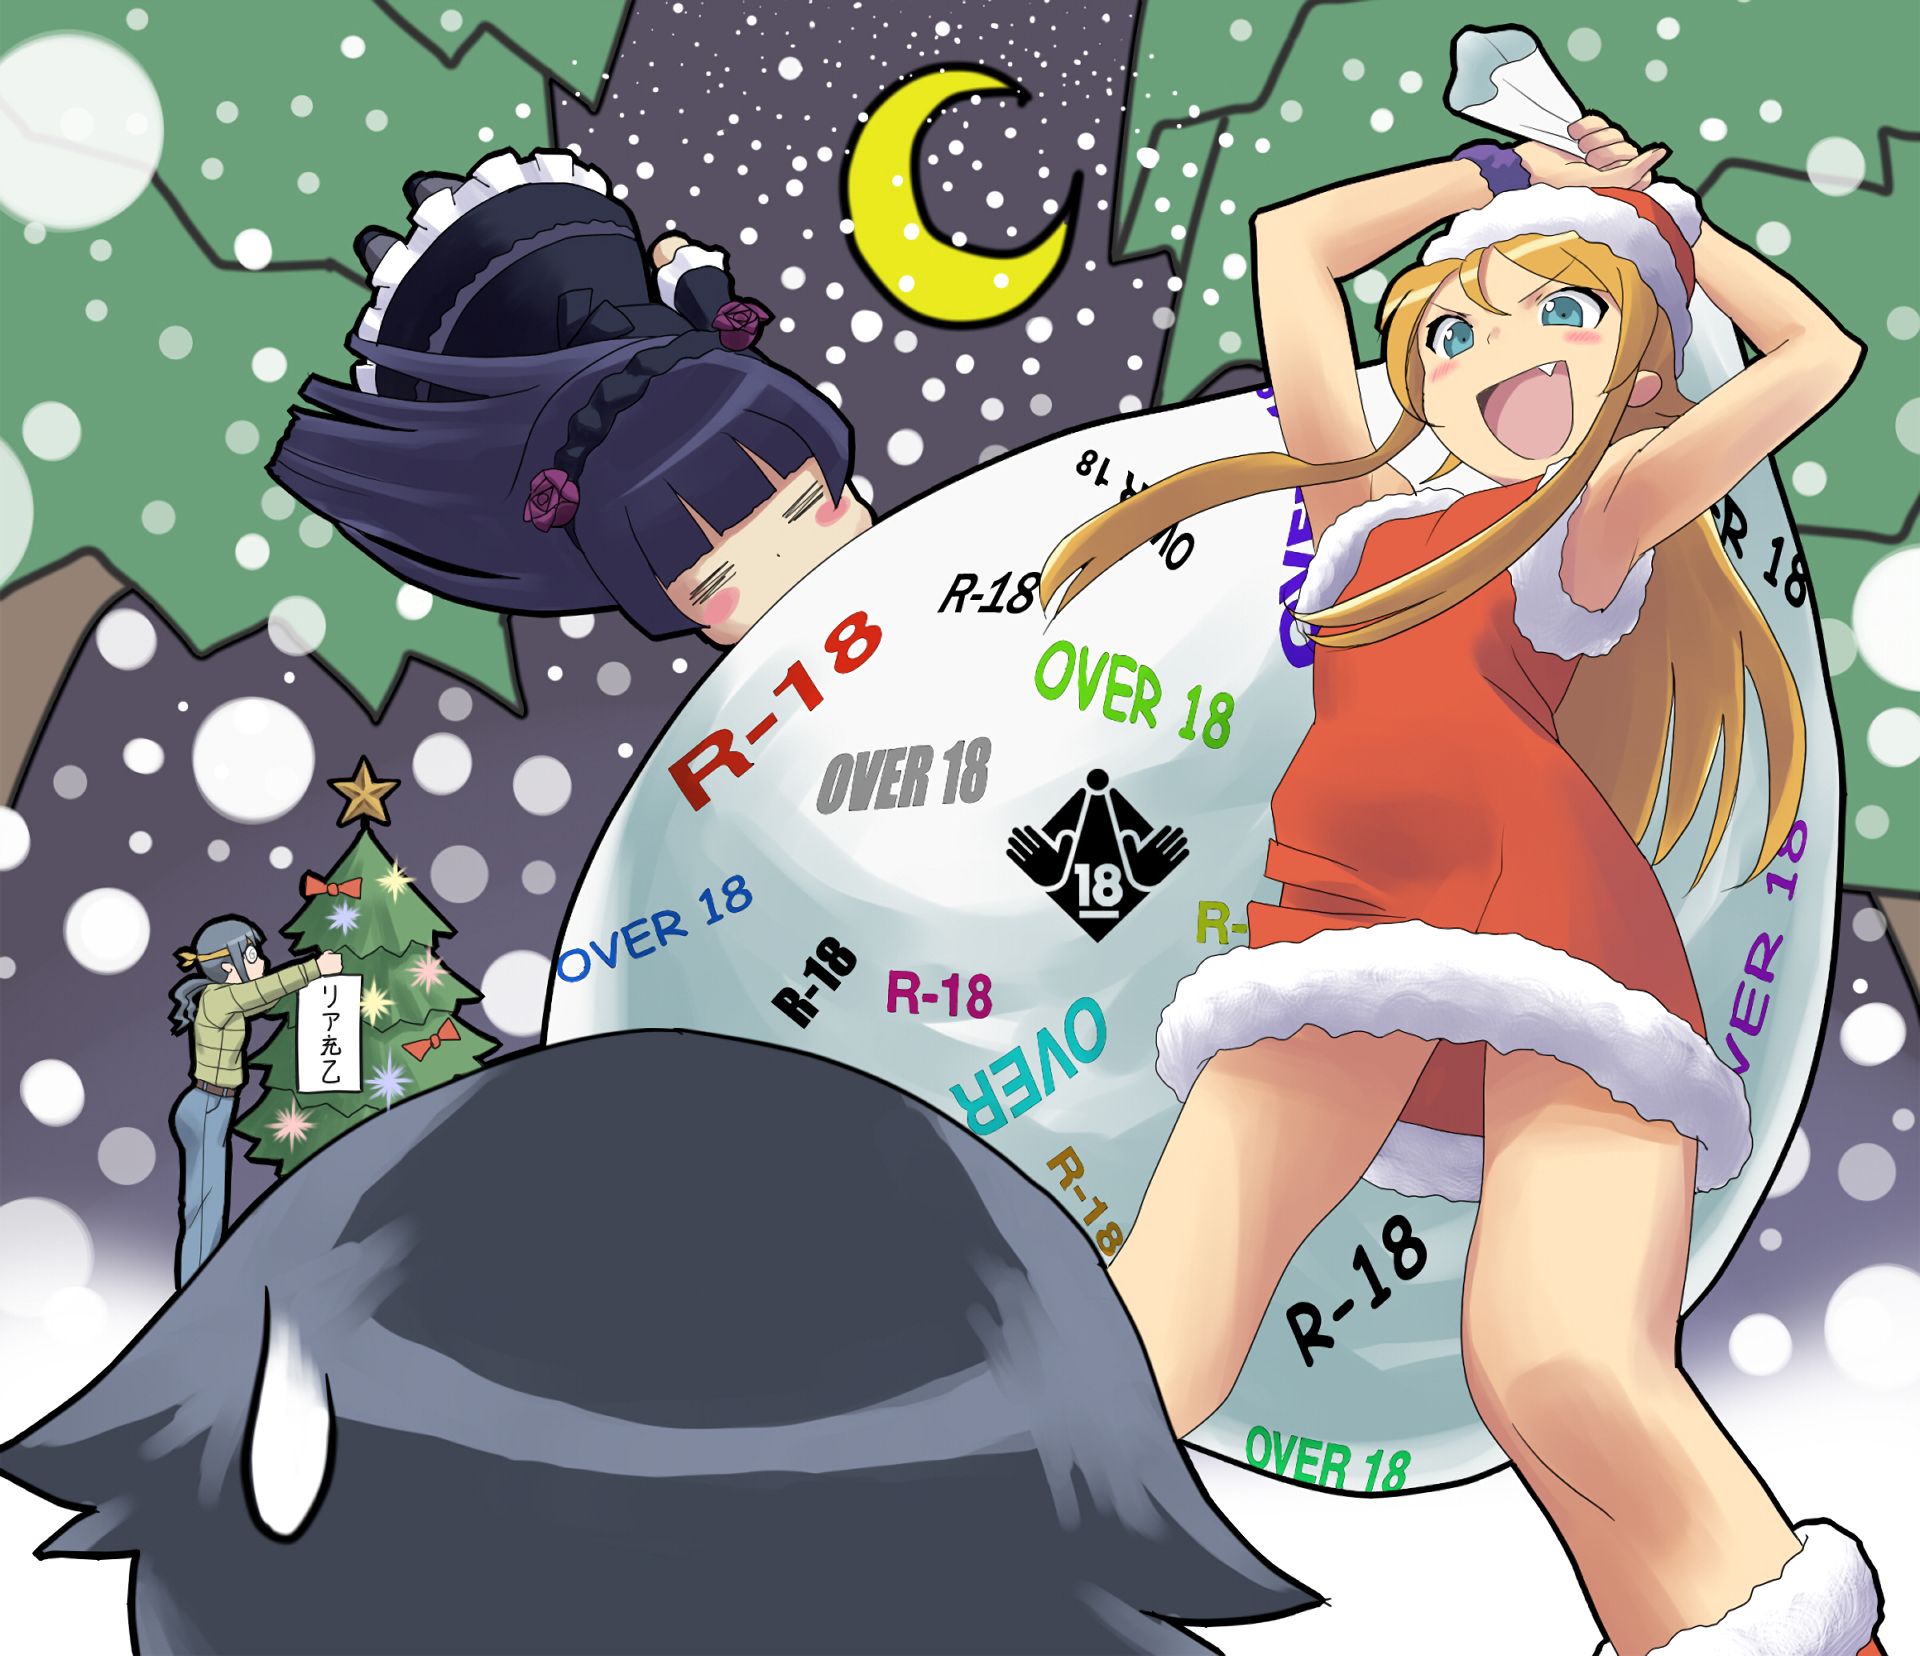 767747 Bild herunterladen animes, oreimo, weihnachten, kirino kousaka, kyōsuke kosaka, ruri goko, saori makishima - Hintergrundbilder und Bildschirmschoner kostenlos